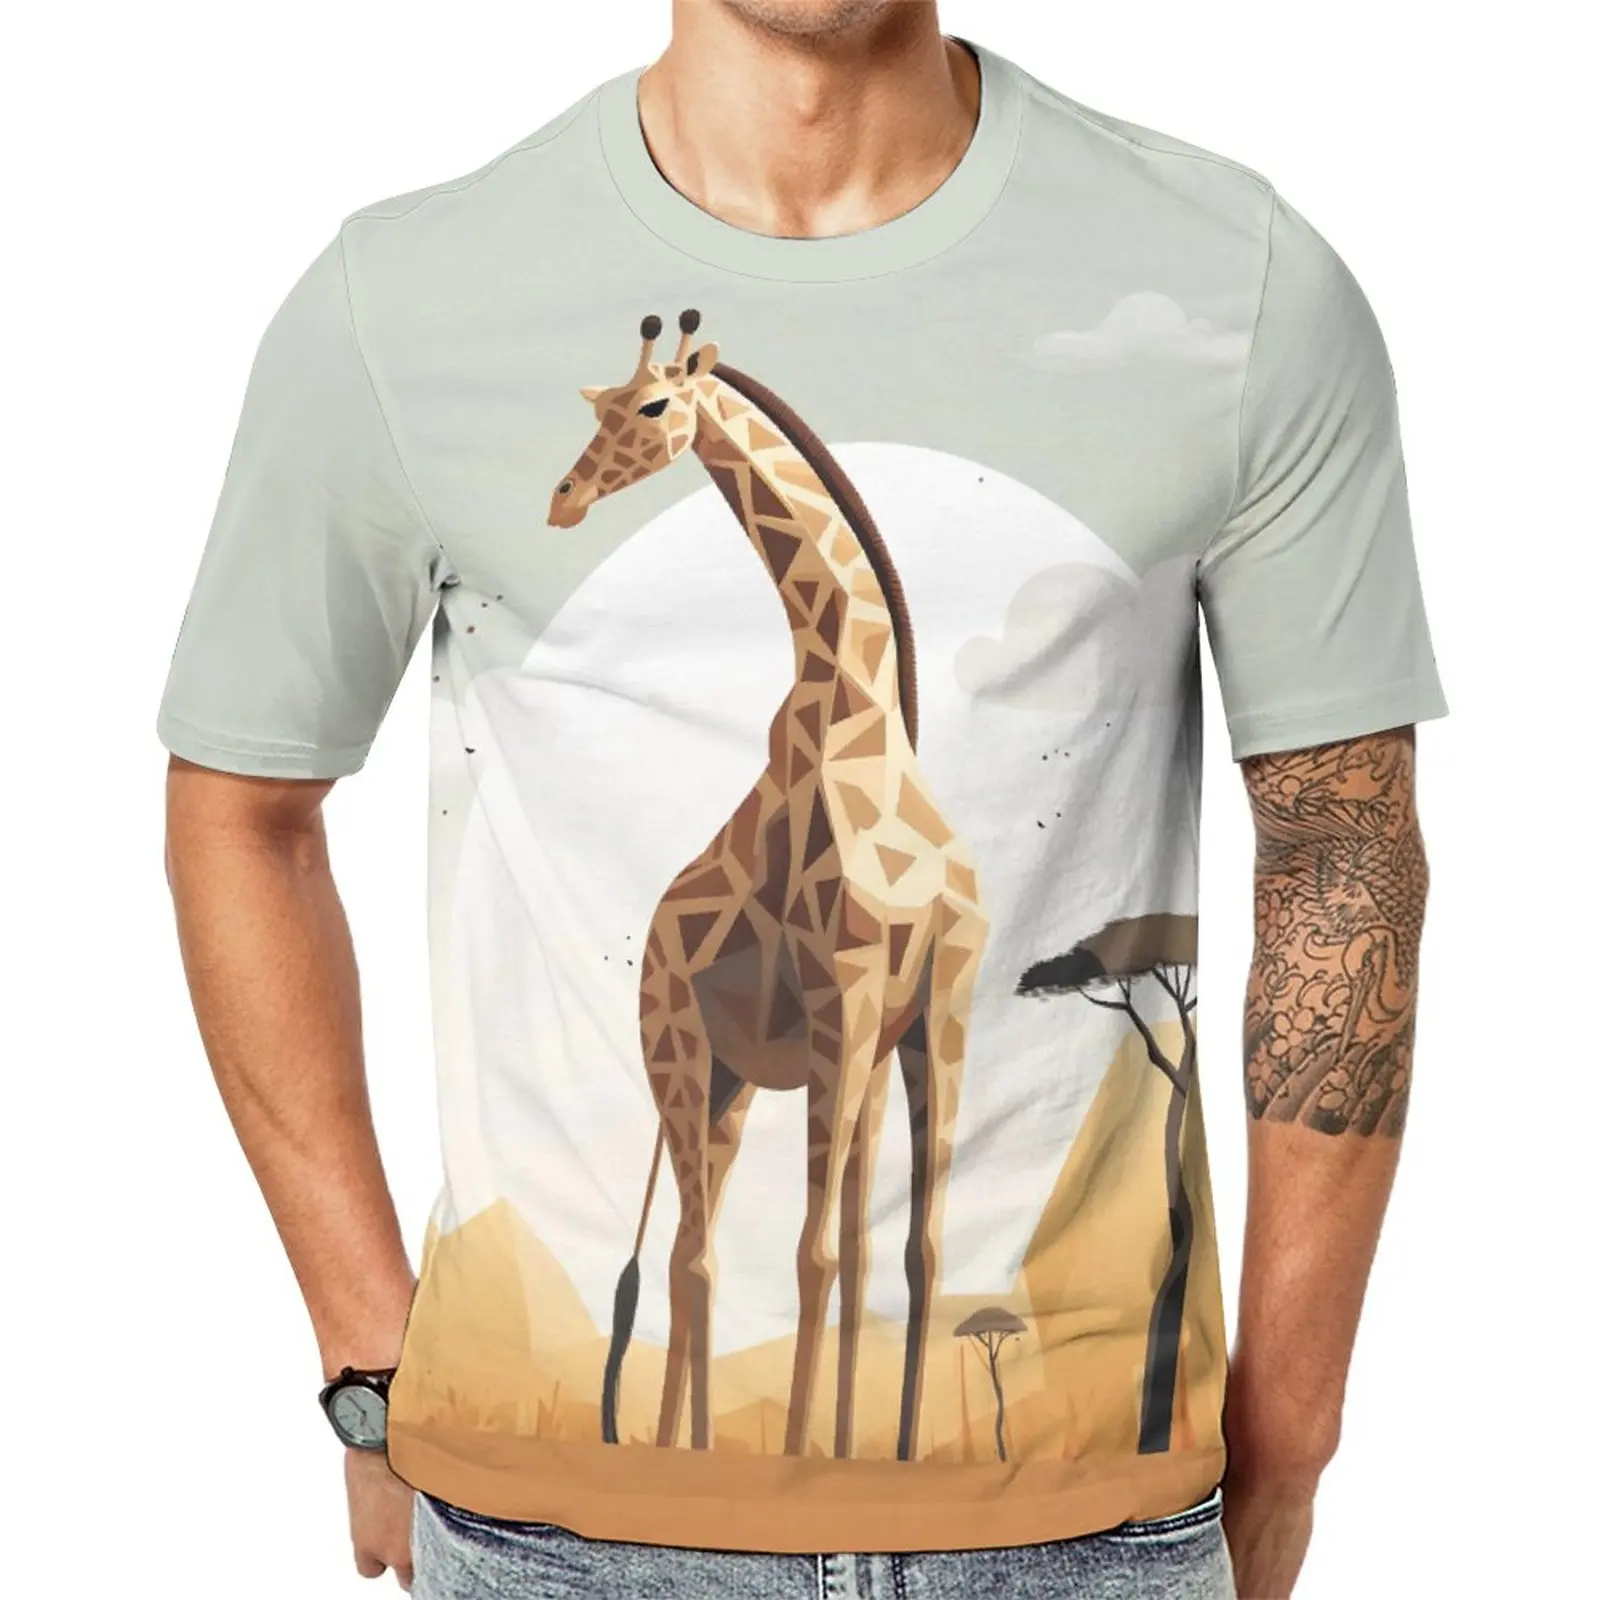 

Giraffe T Shirt Detailed Illustrations Nature Men Popular T Shirts Beach Custom Tee Shirt Short Sleeves Basic Big Size Clothing